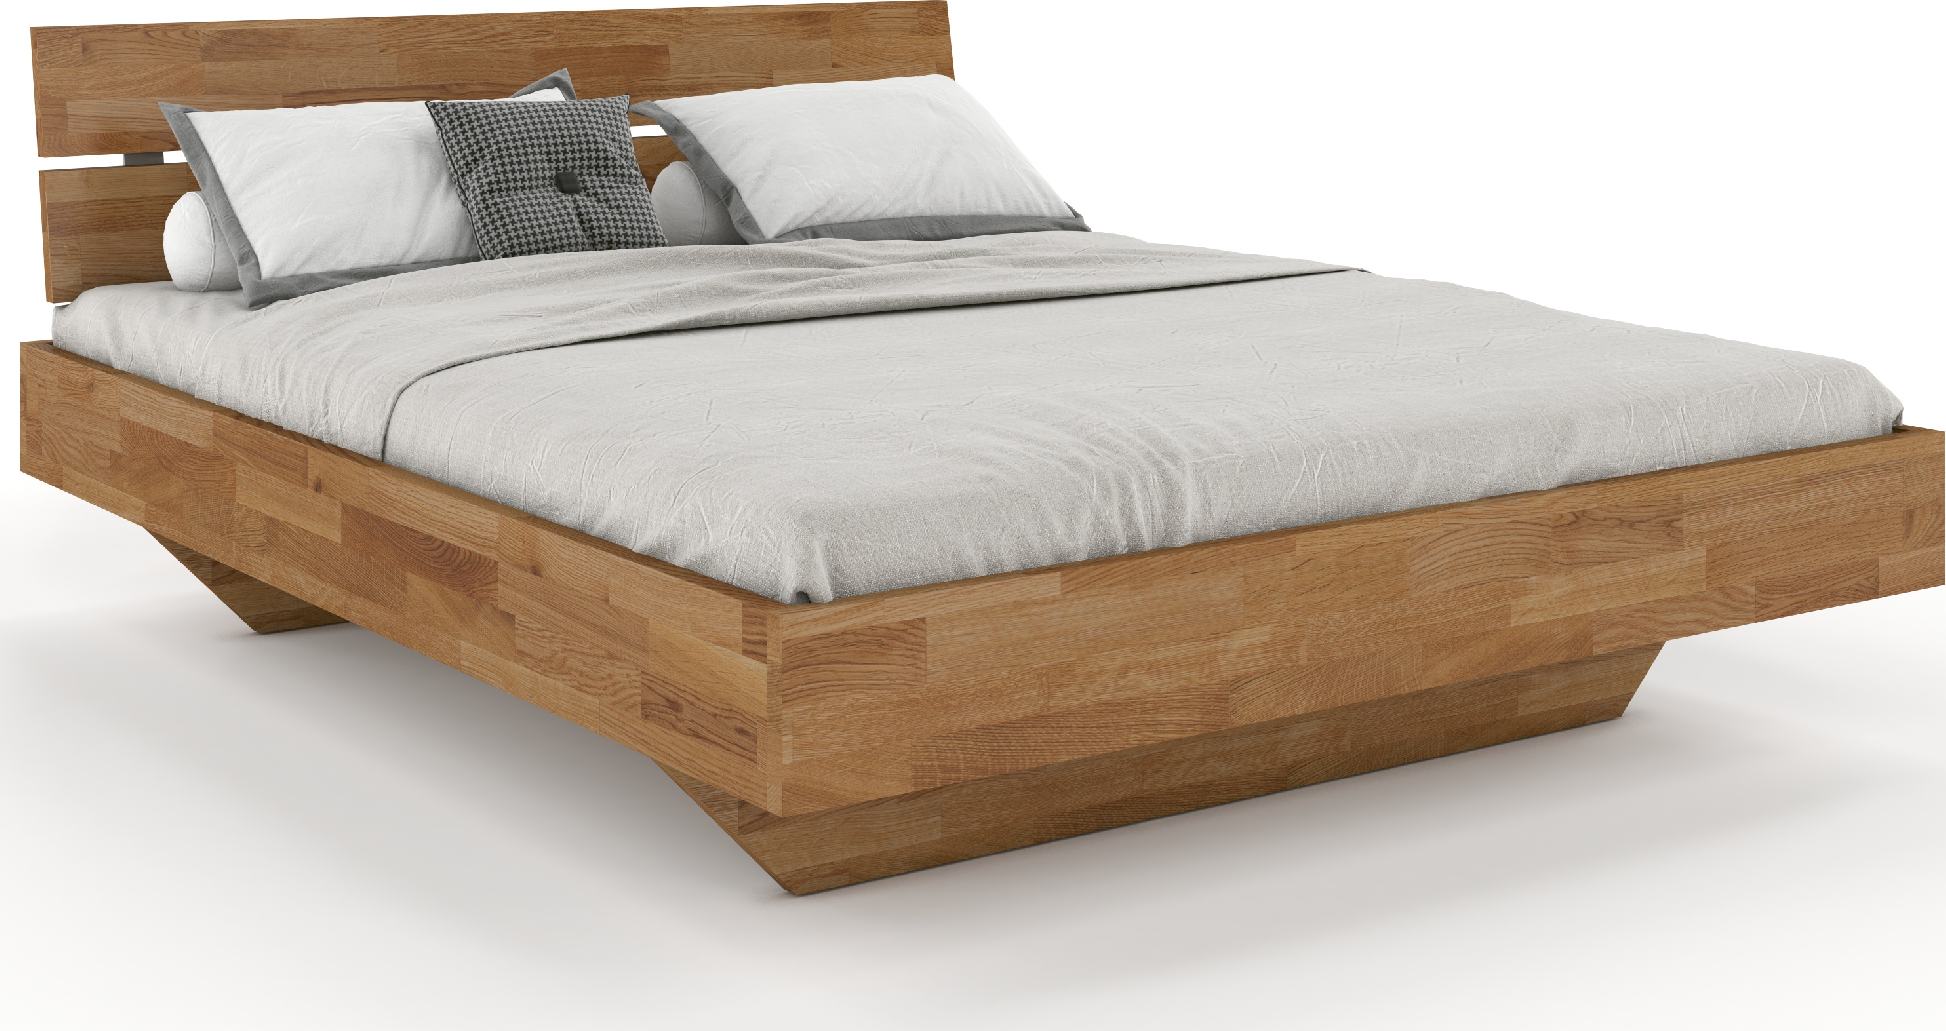 Dubová postel Fred Style 160x200 cm, dub, masiv